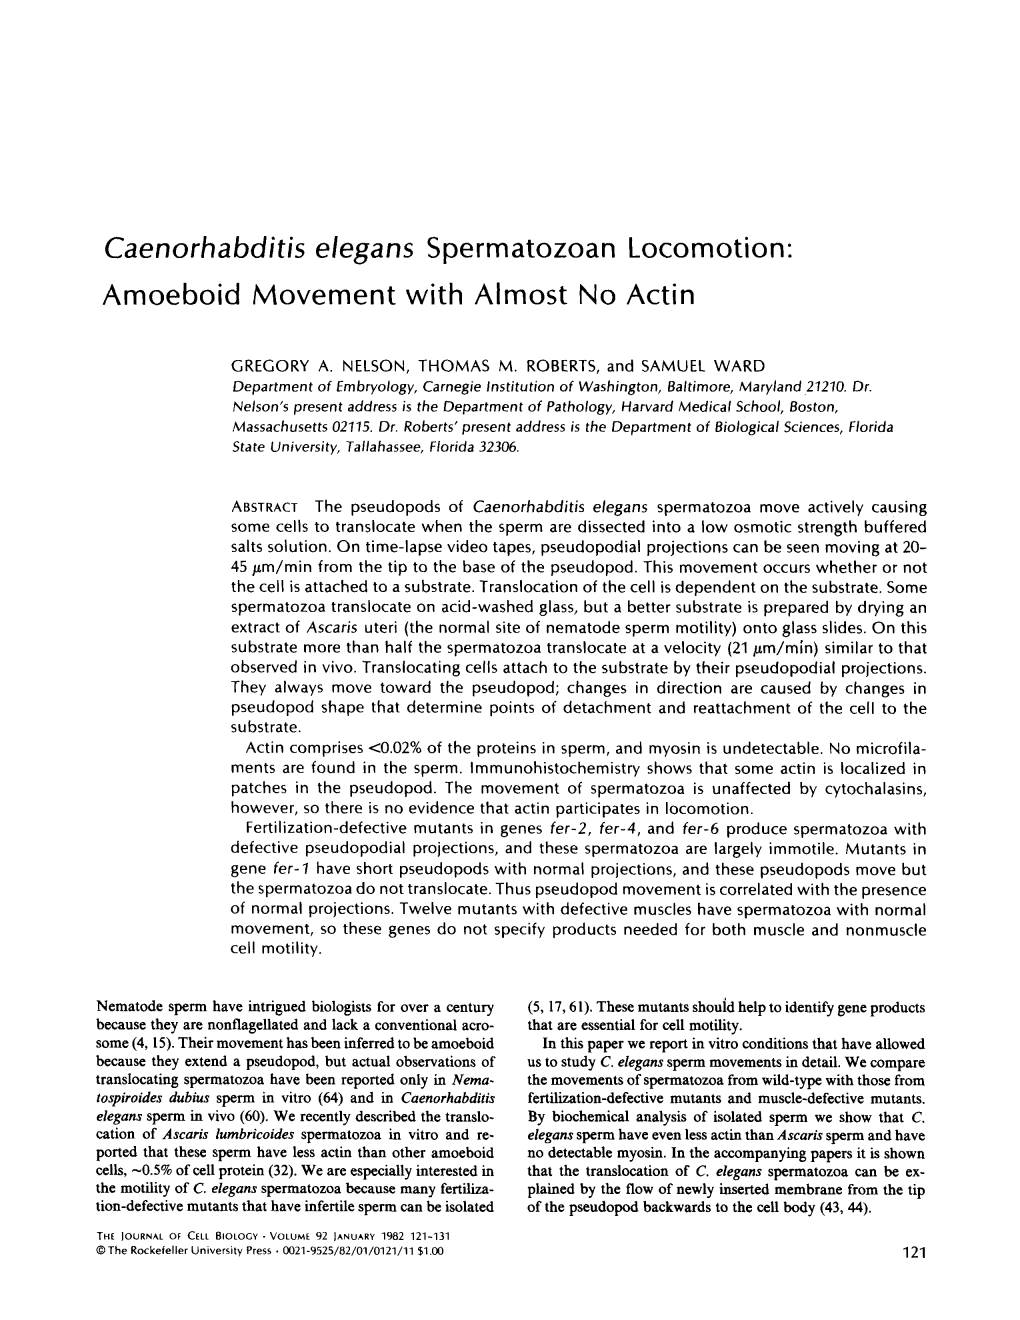 Caenorhabditis Elegans Spermatozoan Locomotion: Amoeboid Movement with Almost No Actin